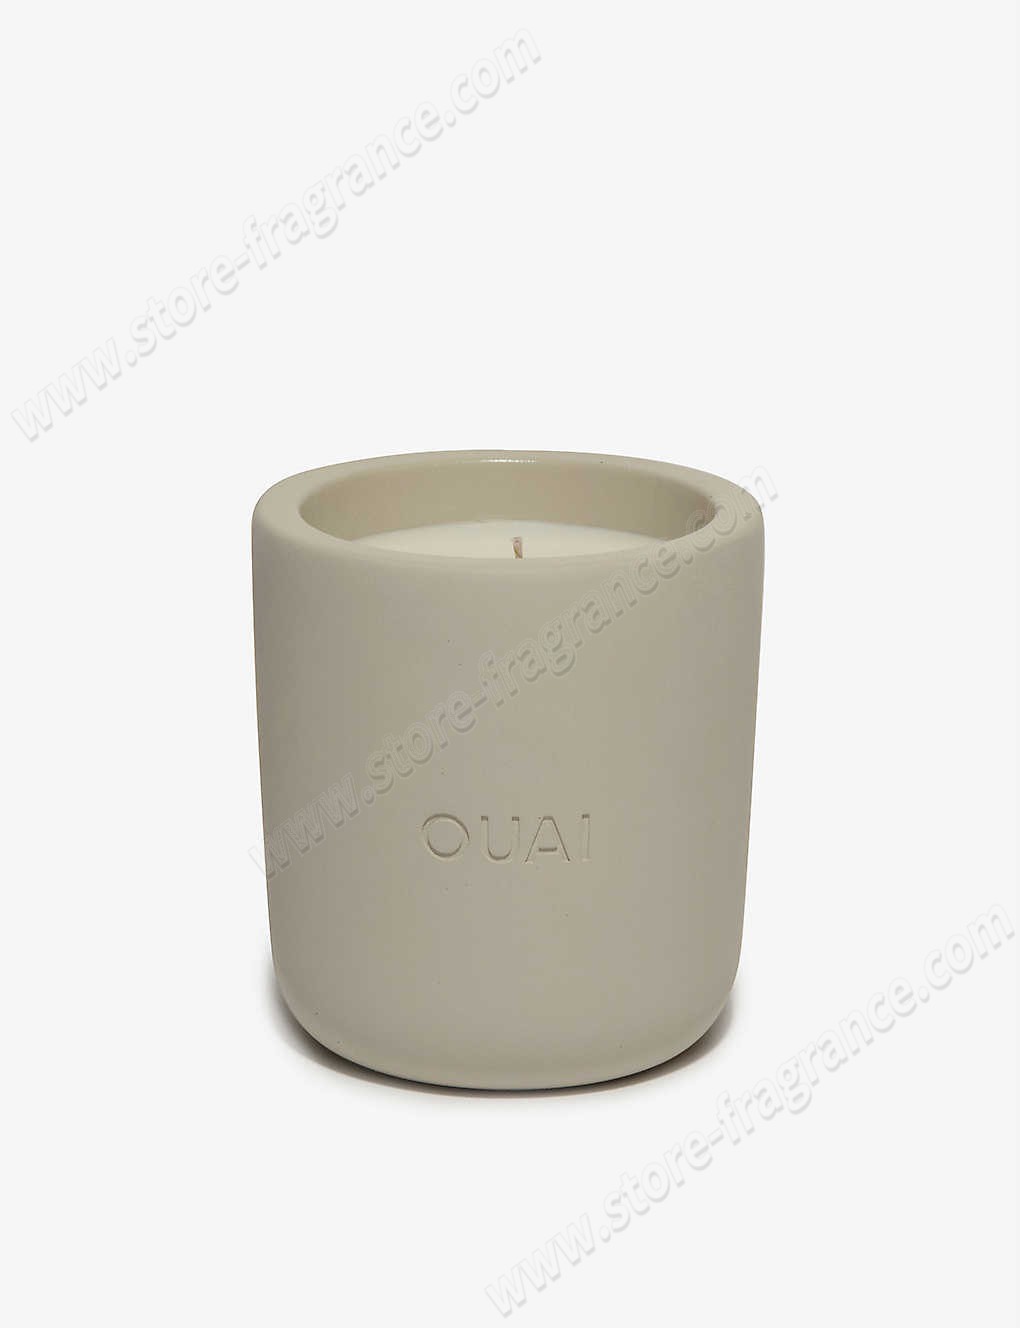 OUAI/North Bondi scented candle 229g ✿ Discount Store - OUAI/North Bondi scented candle 229g ✿ Discount Store